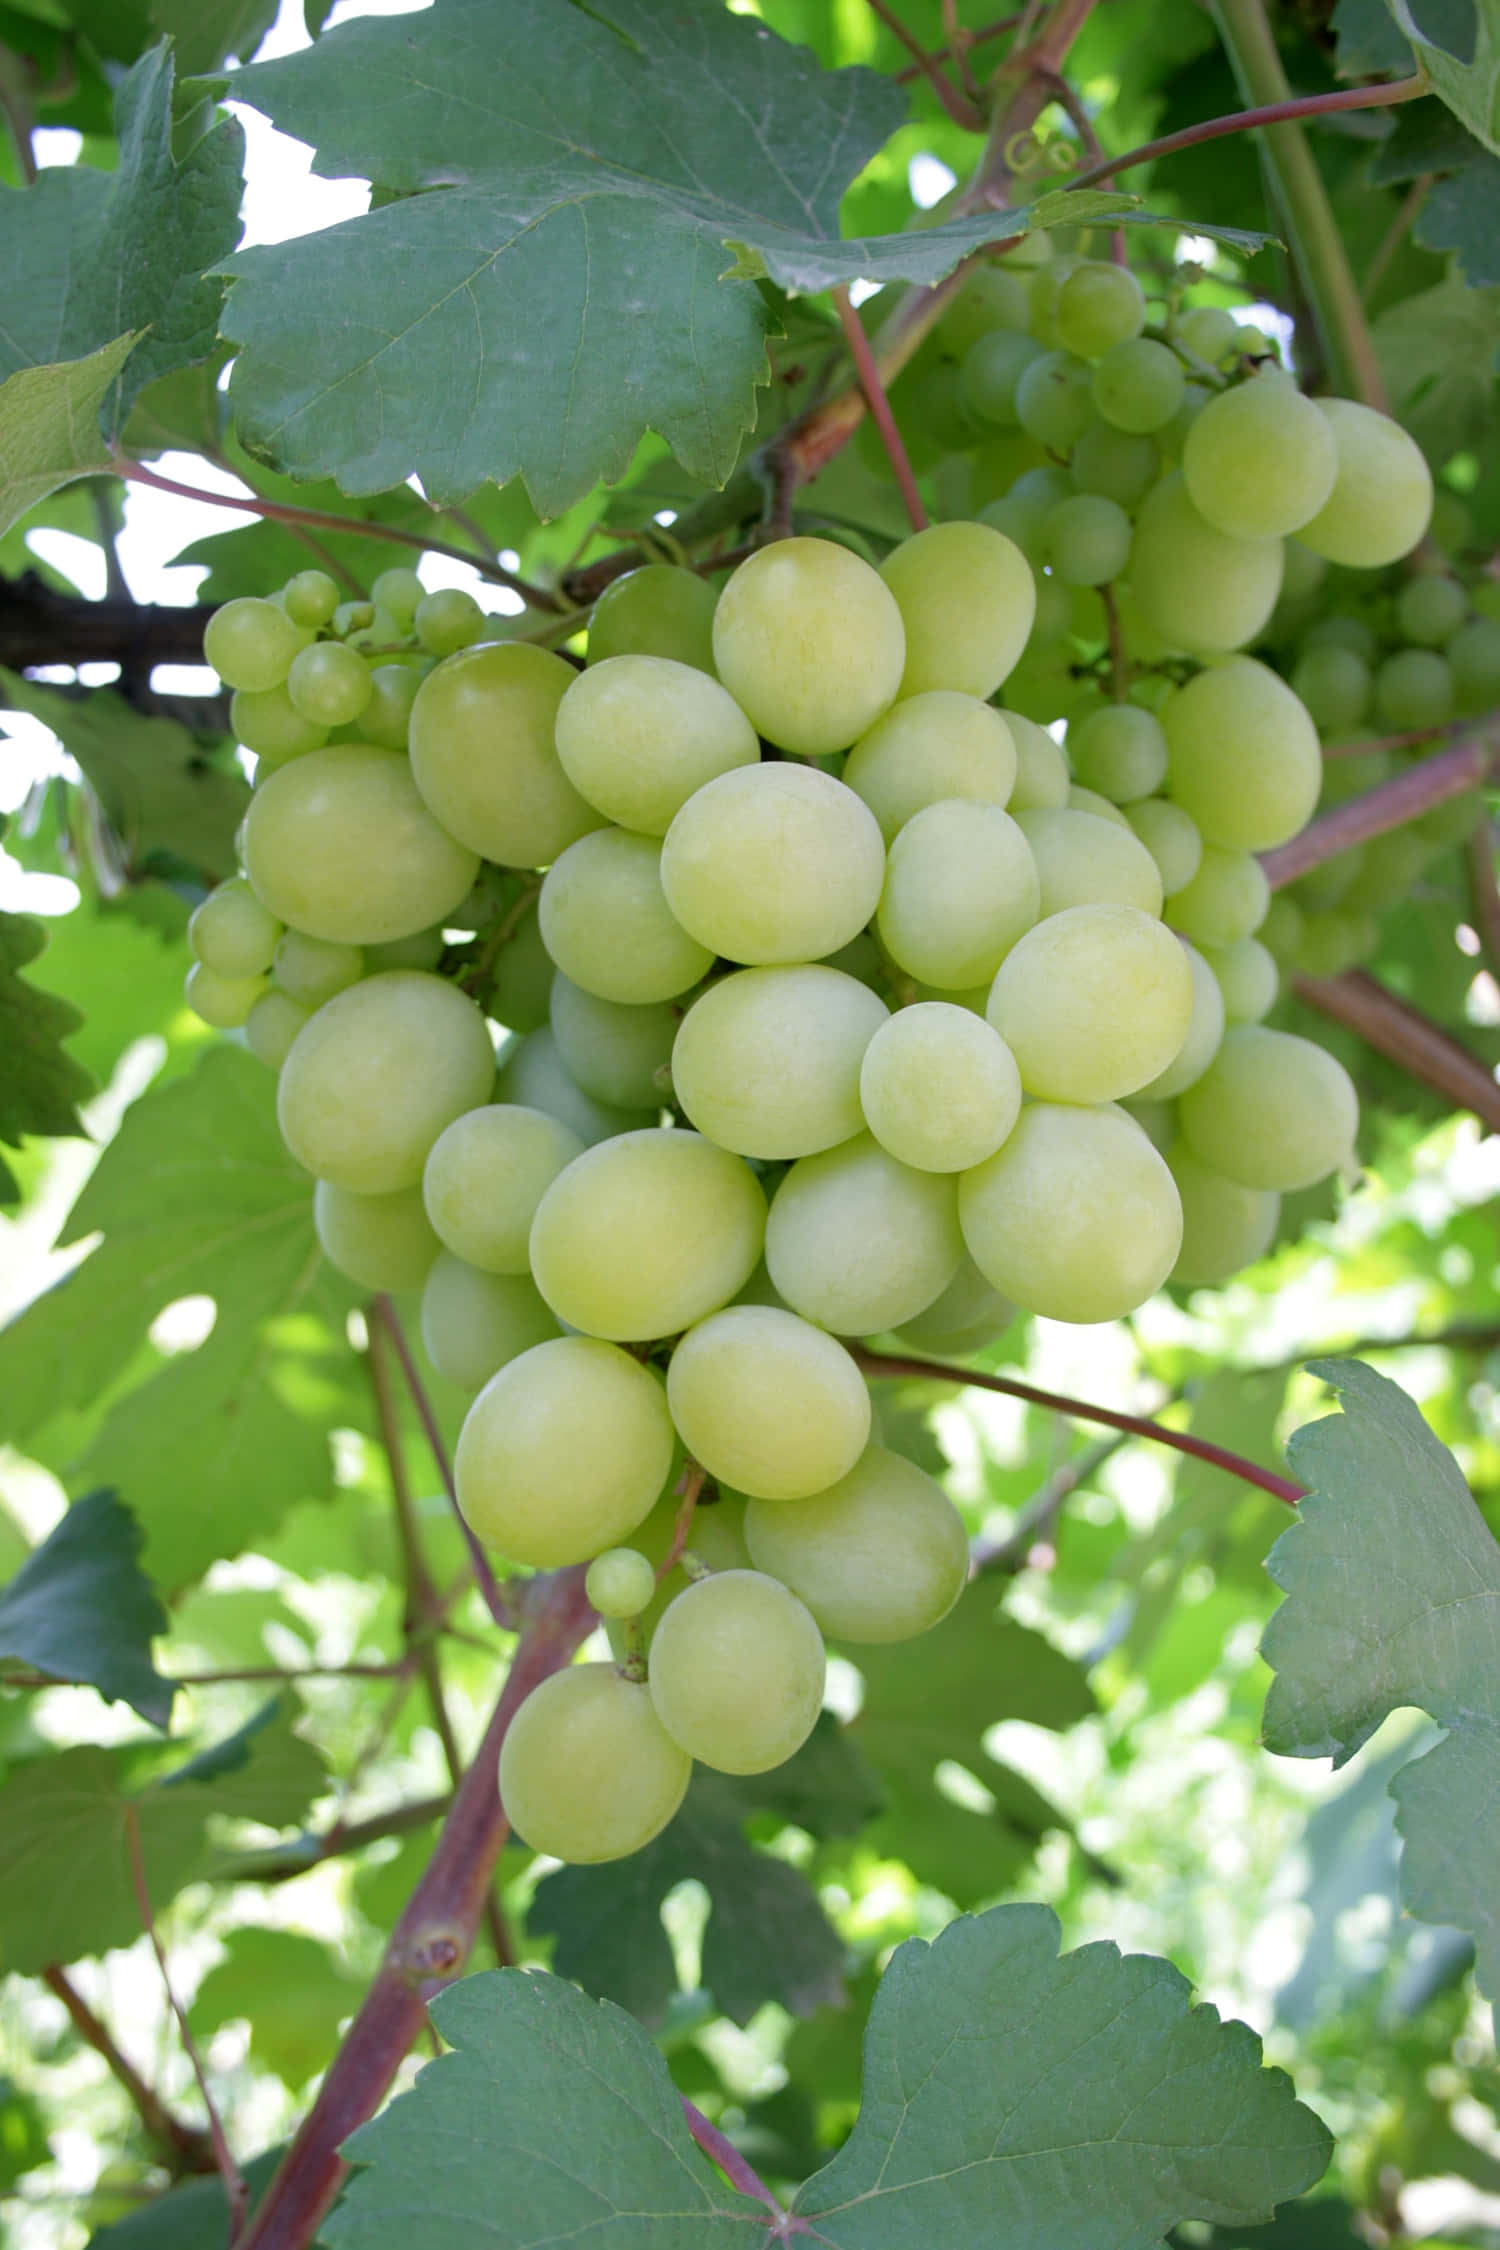 Enjoy a fresh, juicy grape out of the vine